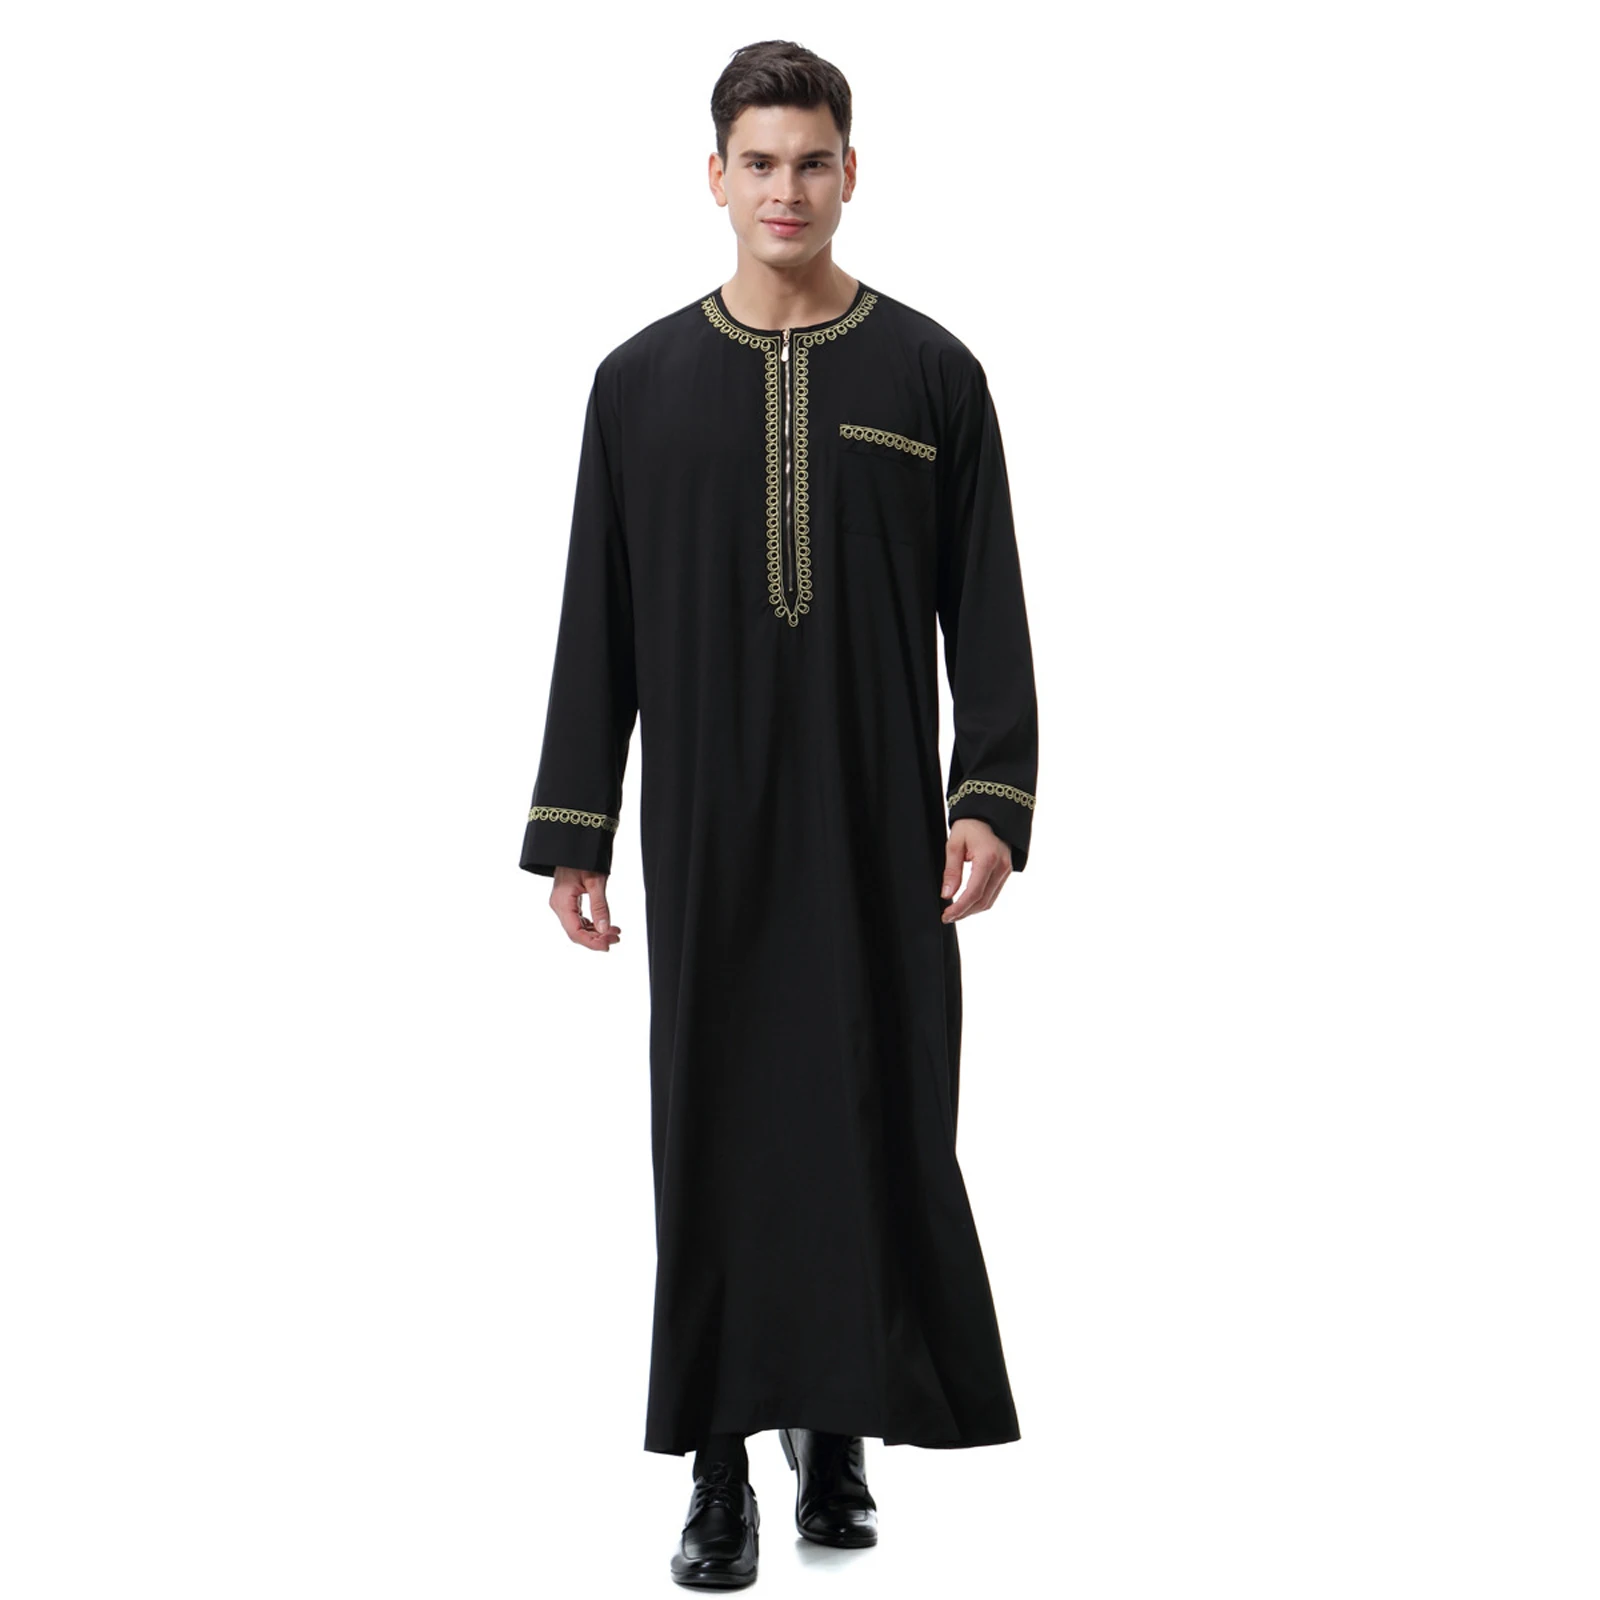 

Muslim Men's Islamic Dubai Robe - Zipper O-Neck Long Sleeve Arab Thobe Saudi Style Dishdasha Kaftan Middle East Ethnic Kandoura